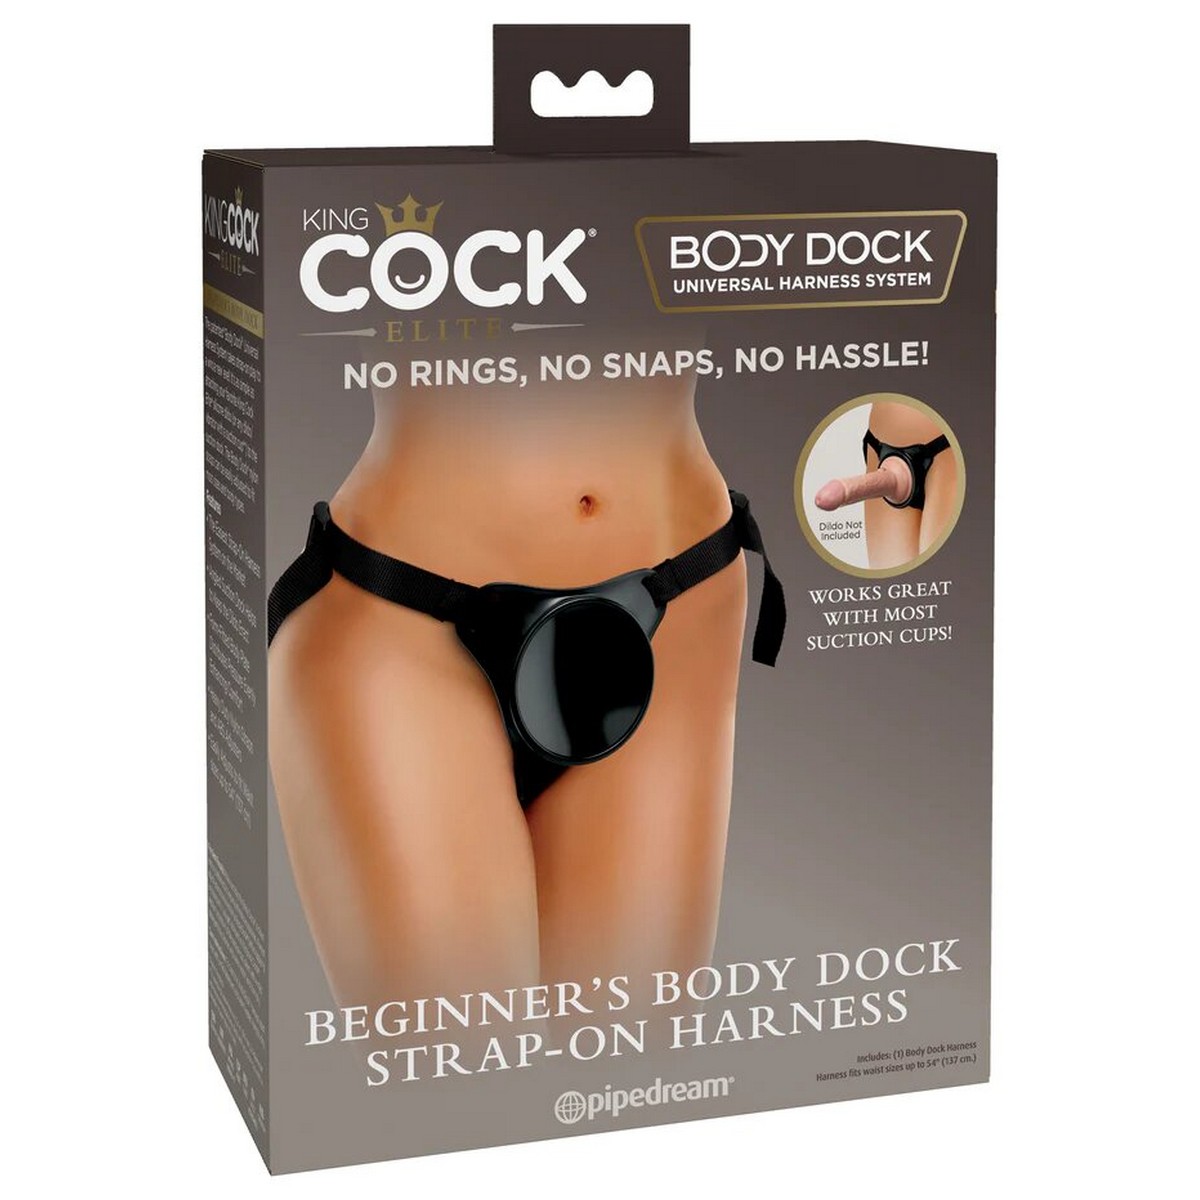  Body Dock Strap-On Harness